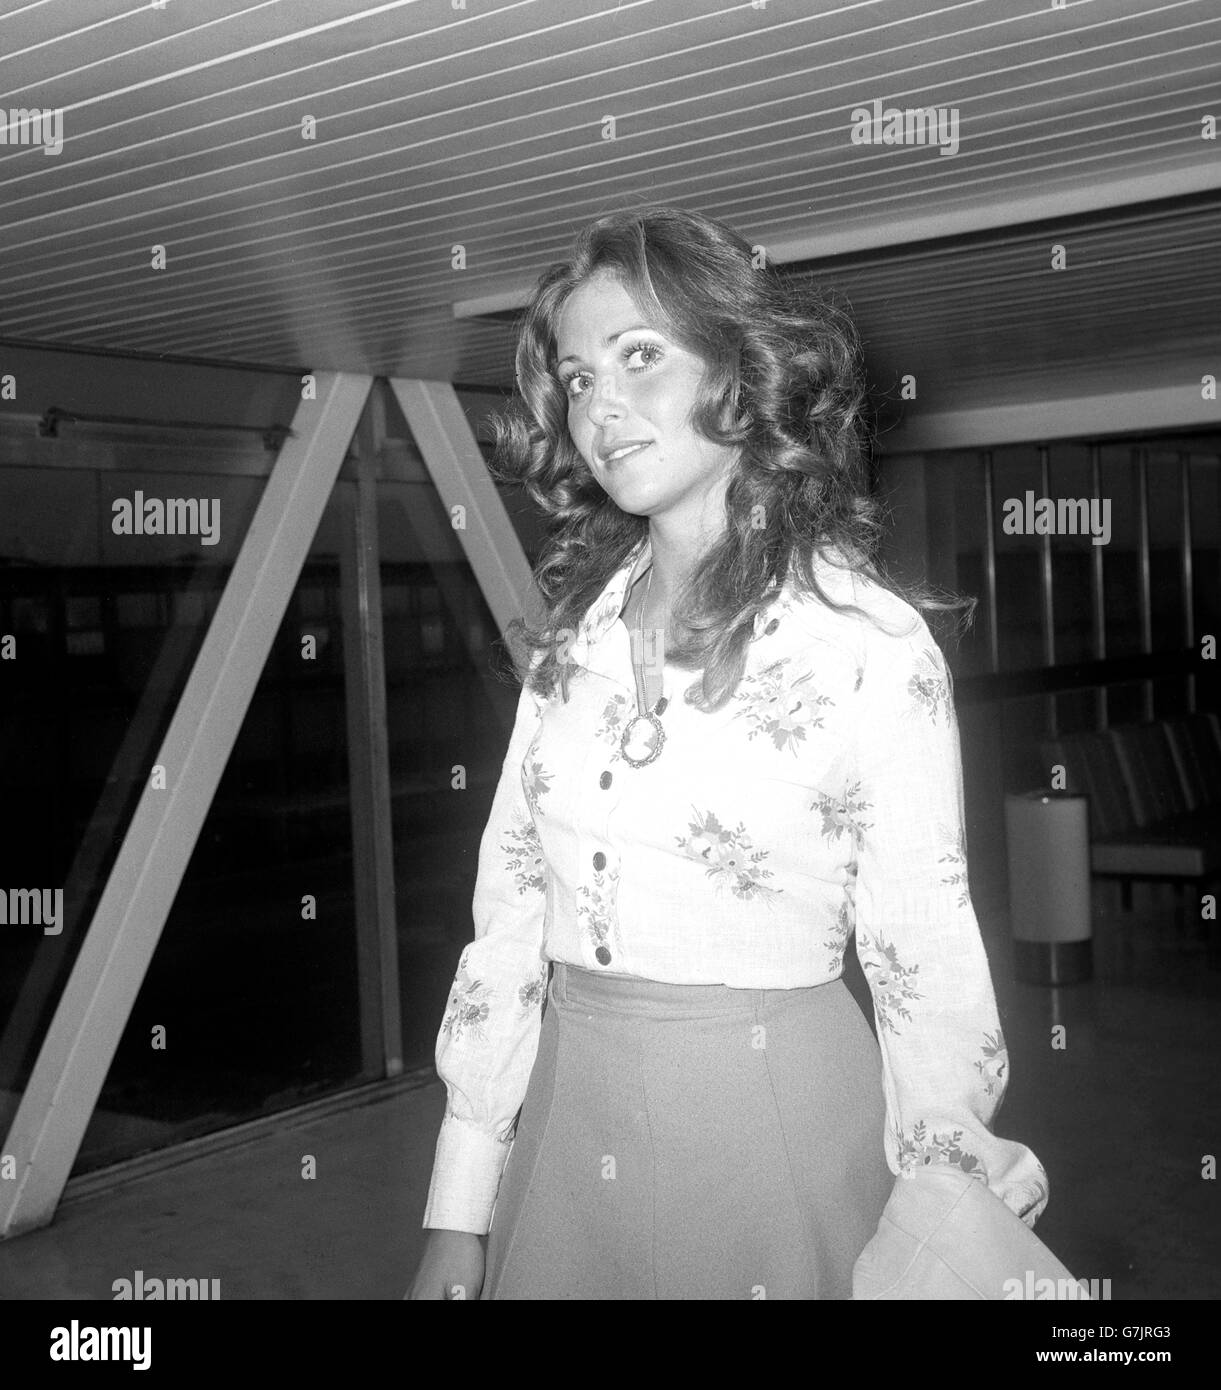 Miss World 1974 - Flughafen Heathrow, London. Miss Israel Lea Konan, 22, kommt zum Miss World-Wettbewerb am Flughafen Heathrow an. Stockfoto